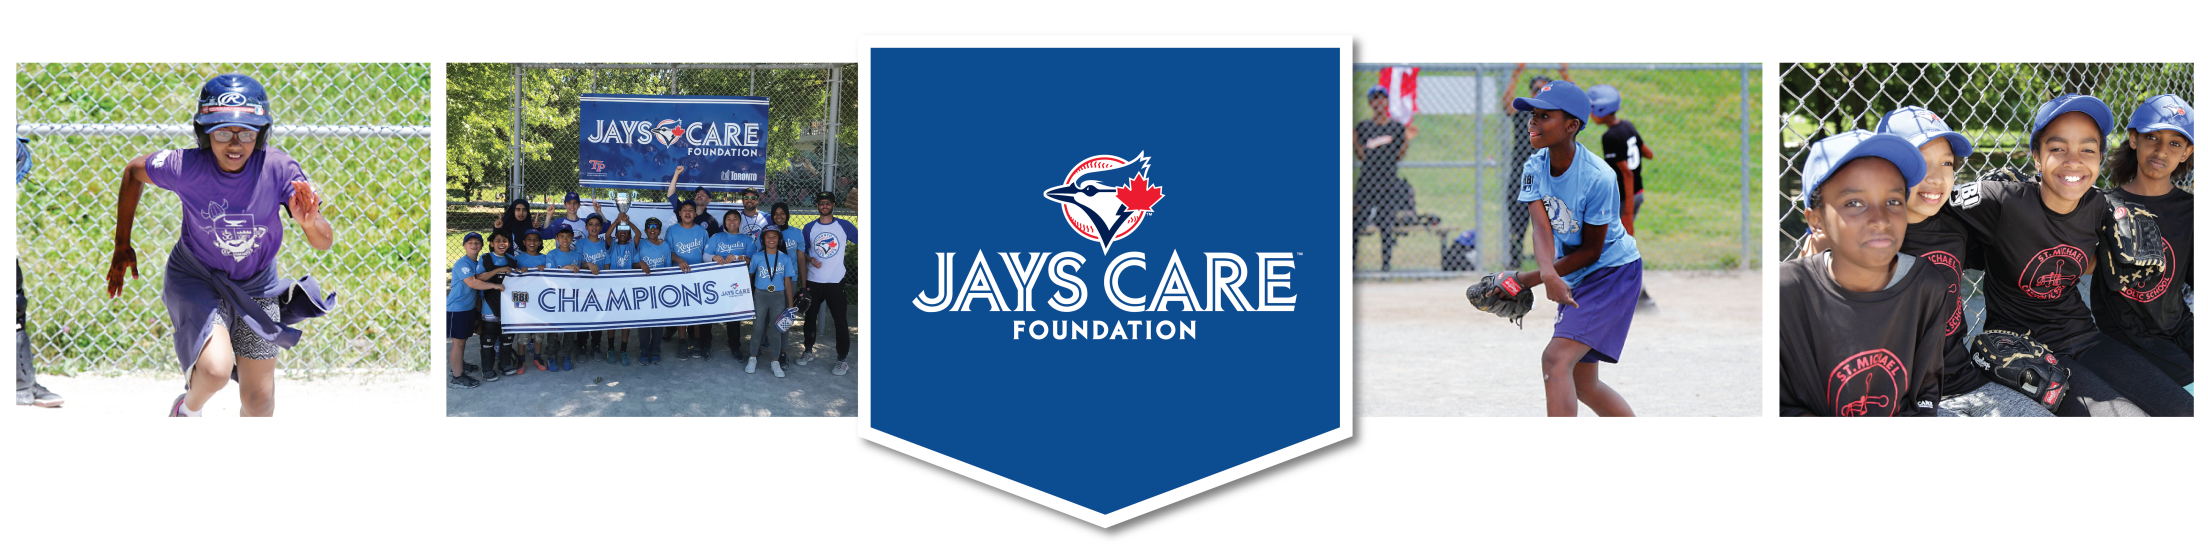 Toronto Blue Jays Community Outreach Program — Kidzsmart